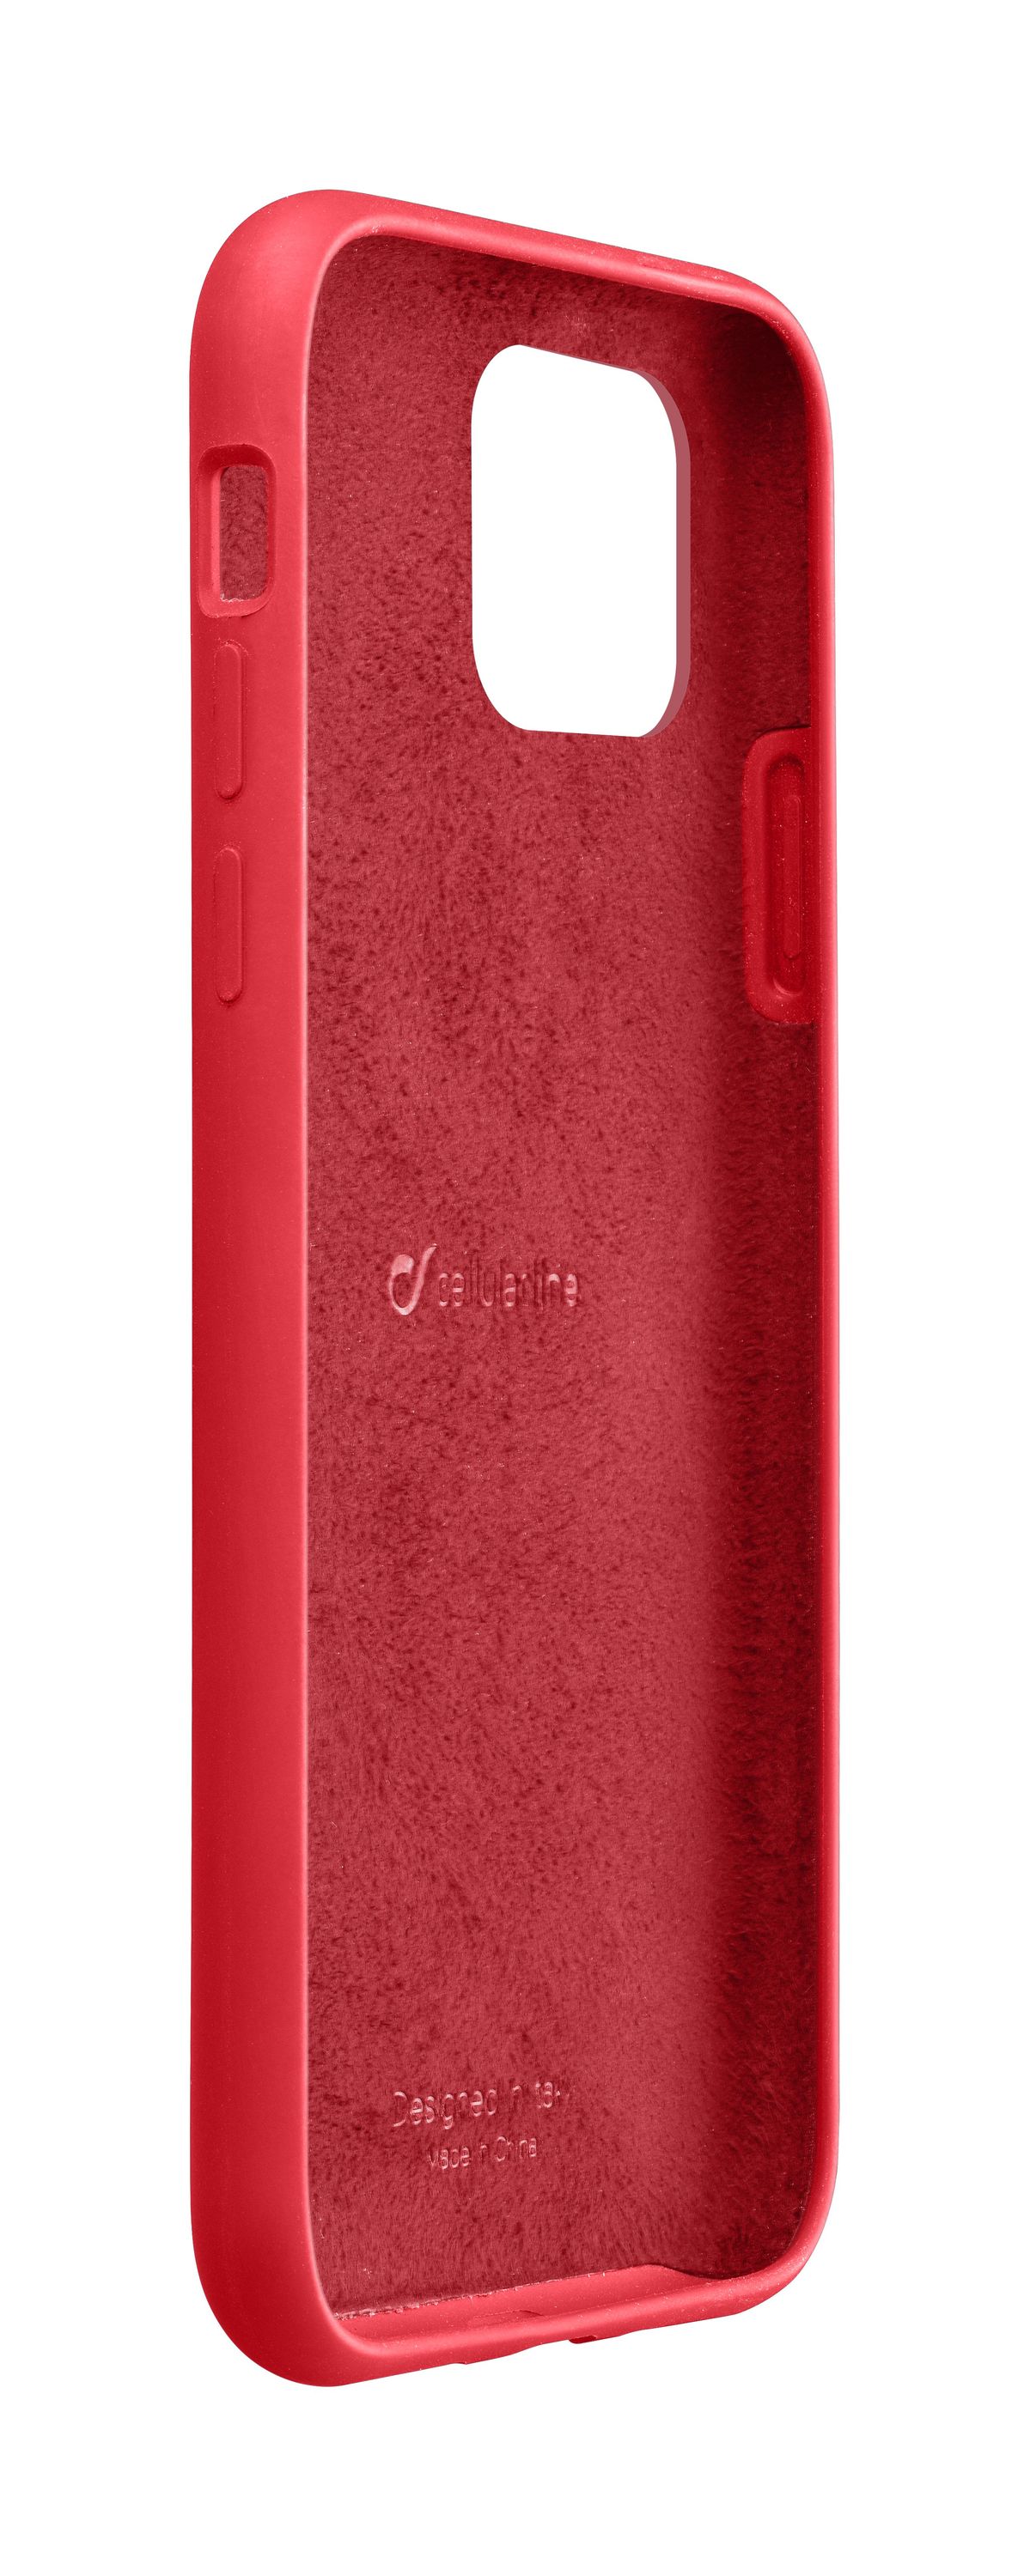 iPhone 11 Pro, case sensation, red